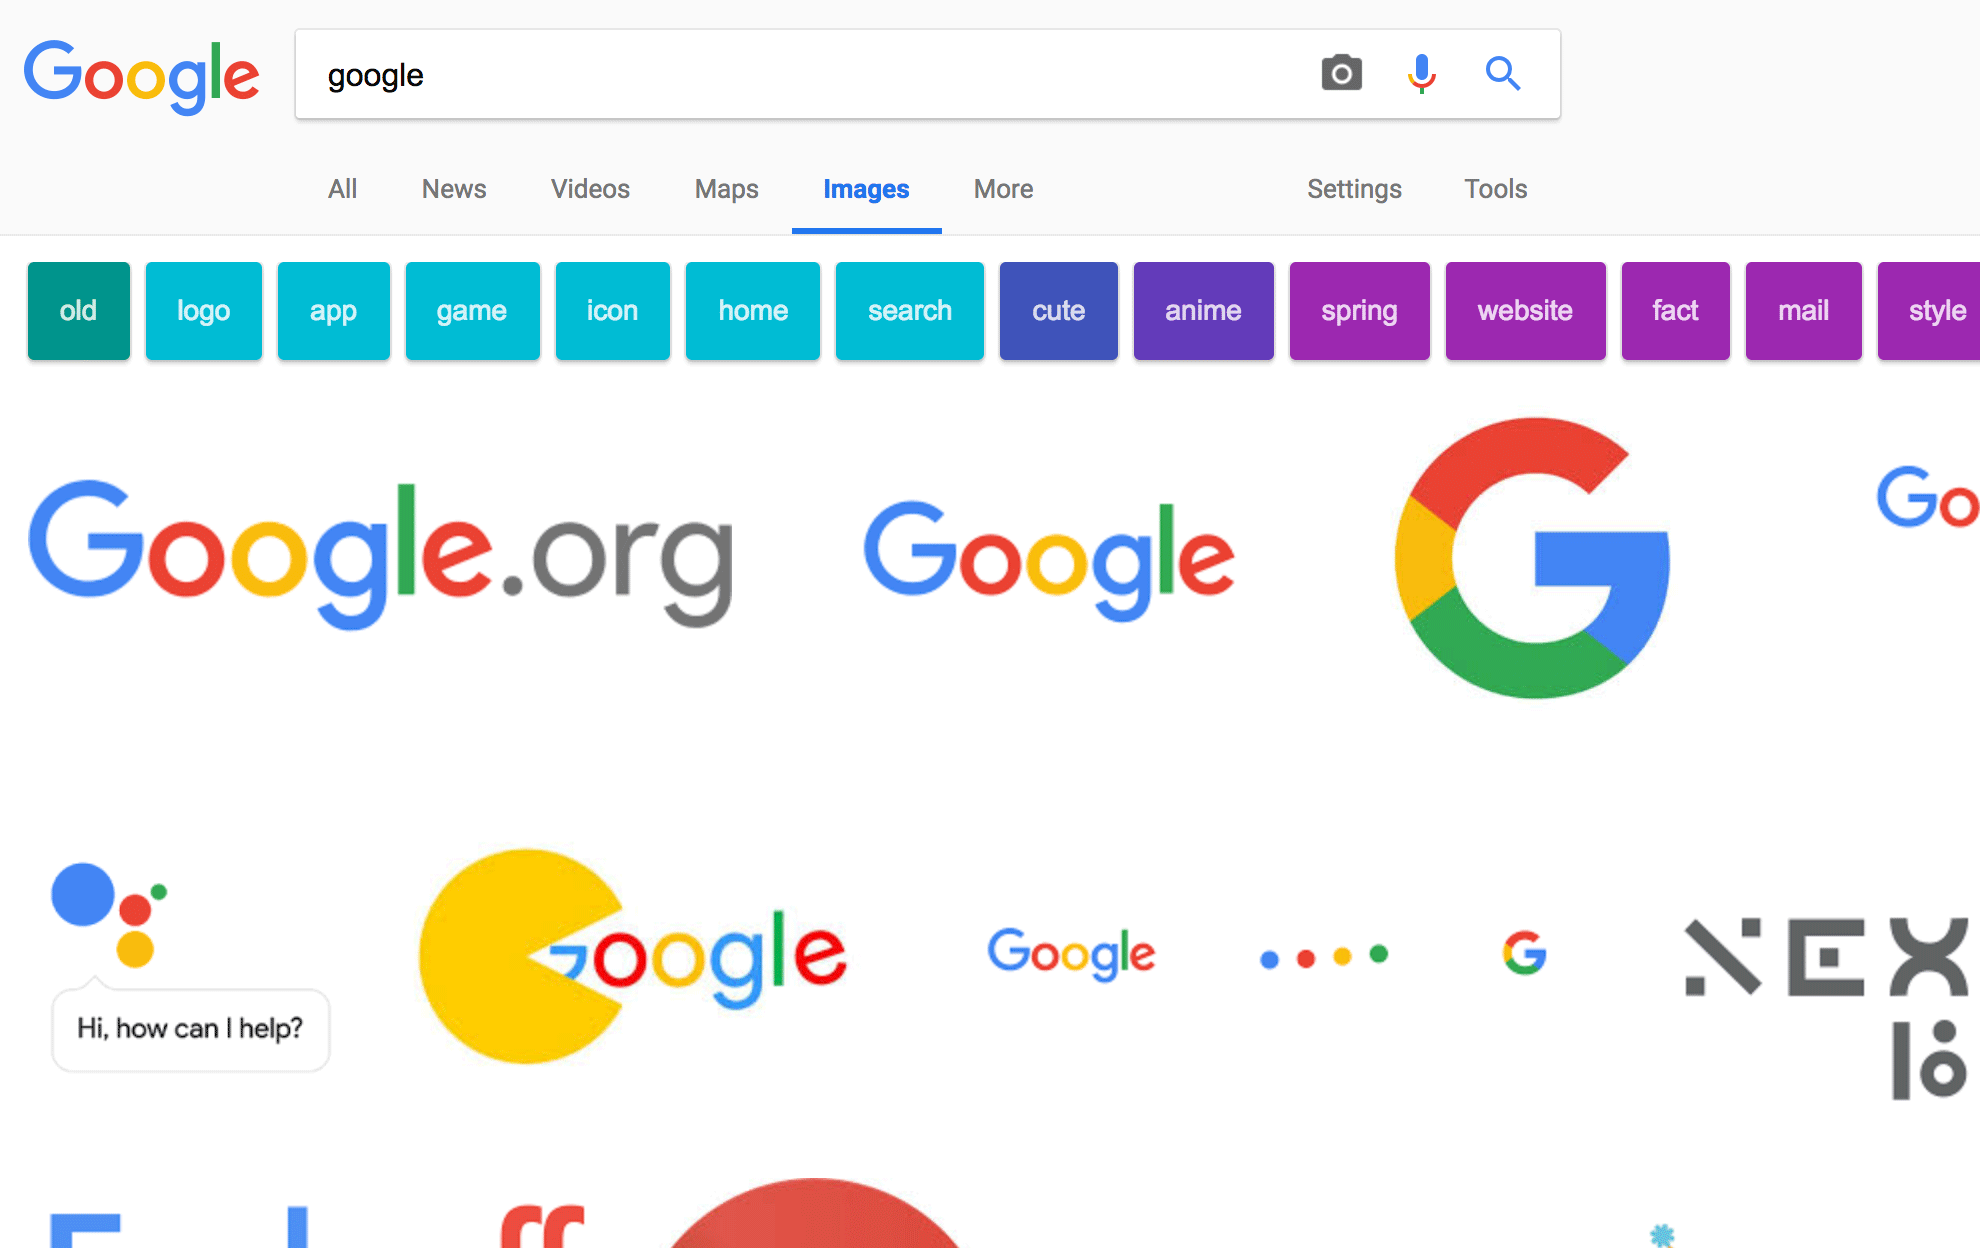 google-image-search-tests-bridging-mobile-design-to-desktop-search-results